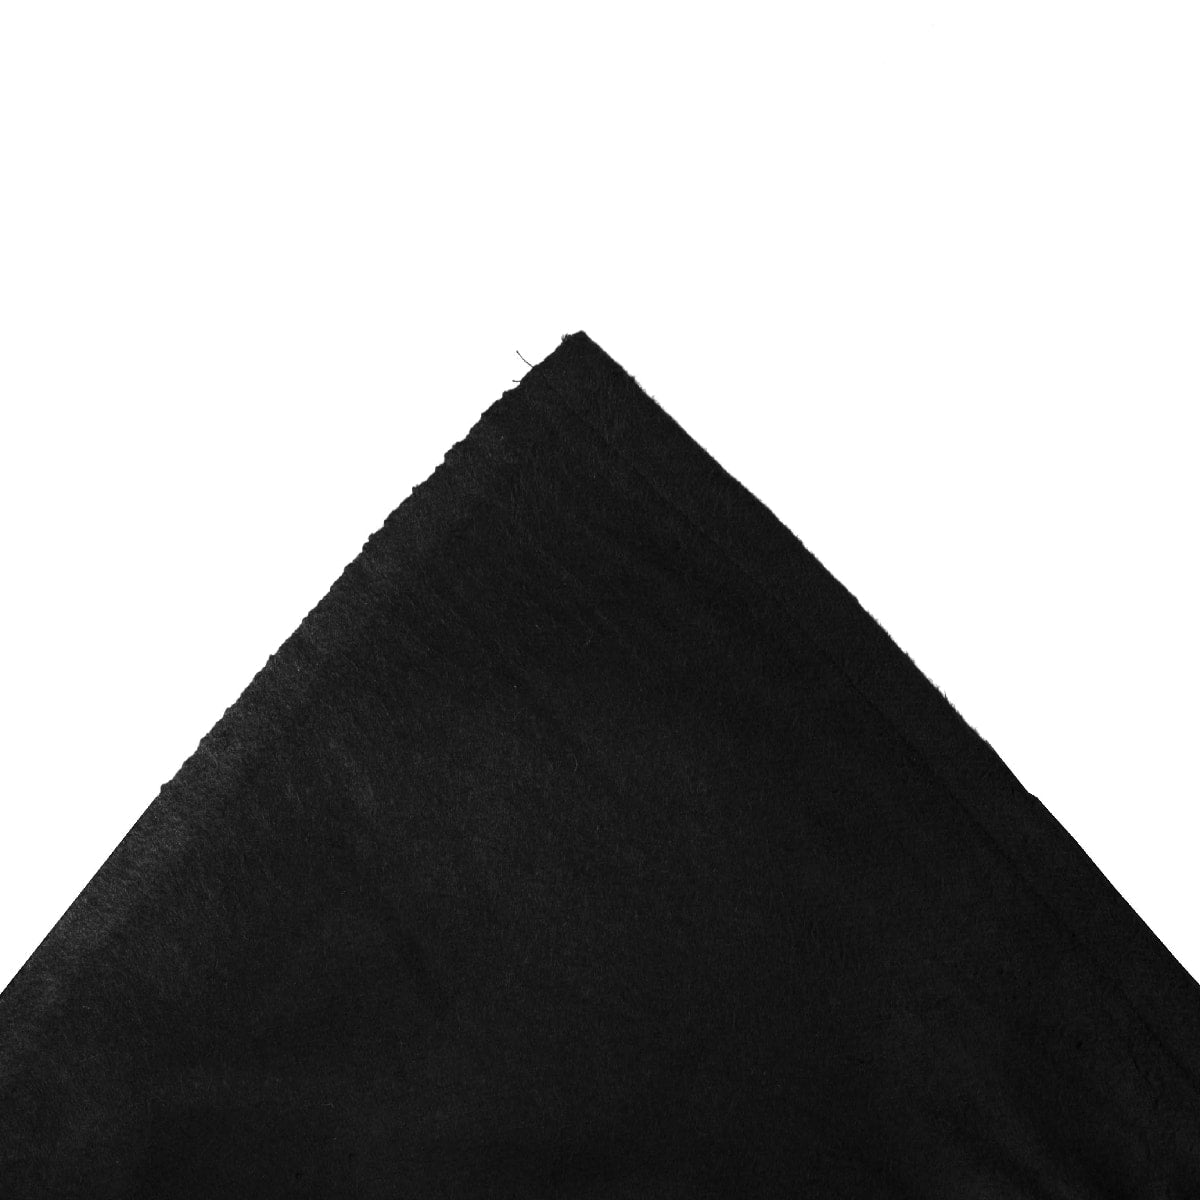 Black Material/Molton 300 x 300 cm / 10 x 10' (FLOOR USE)